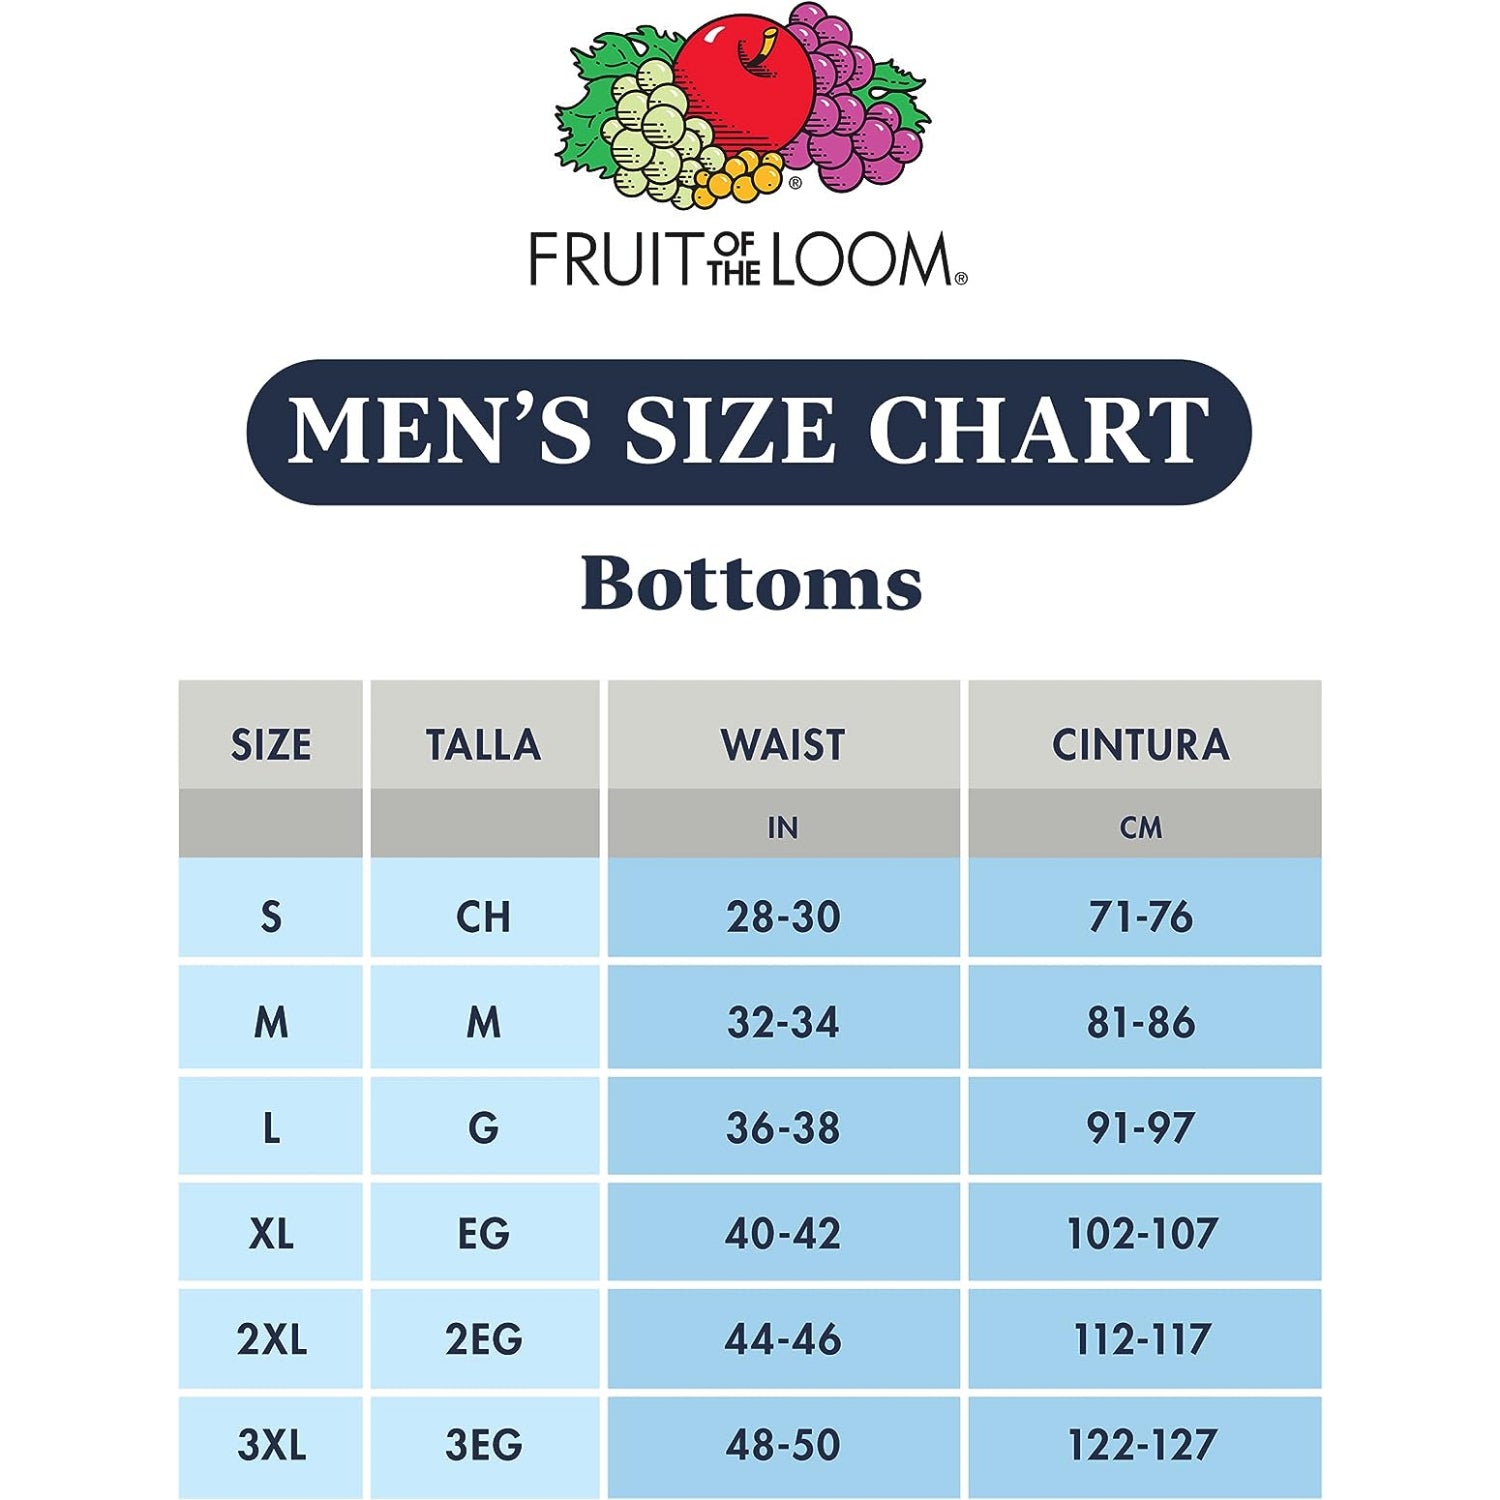 Men's Breathable Cotton Micro-Mesh Assorted Color Boxer Brief